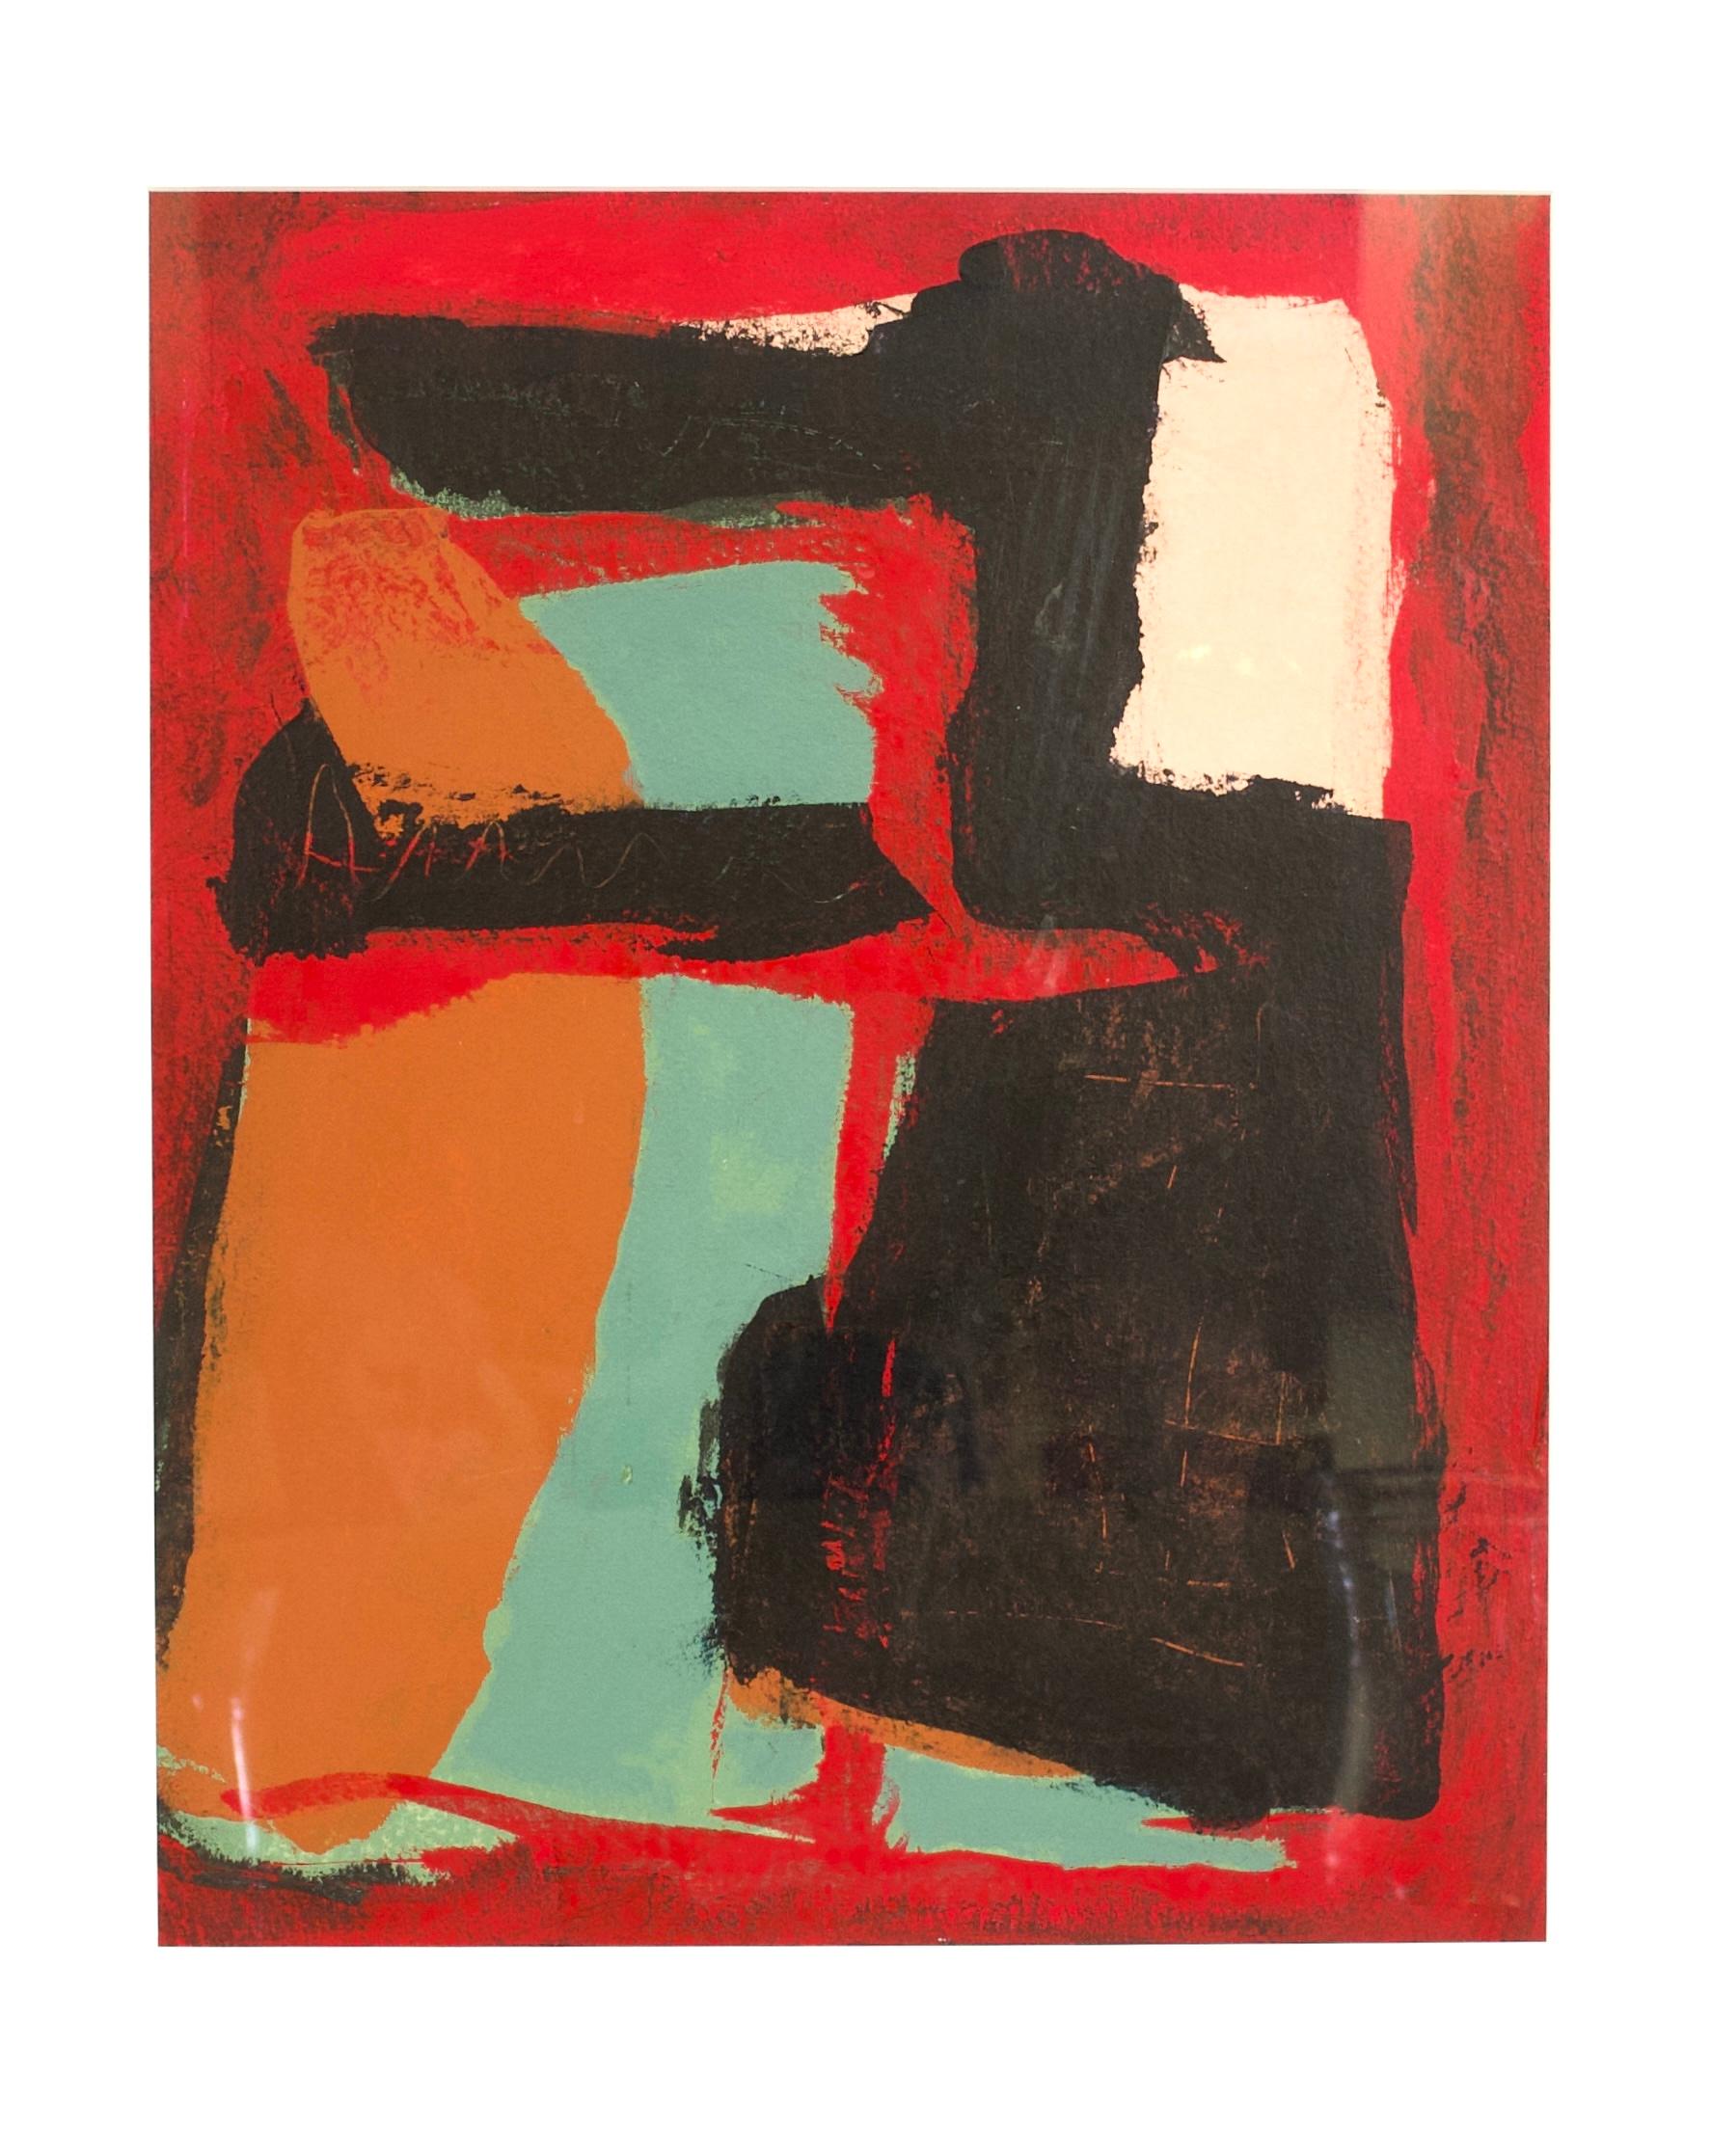 Tom Reno Abstract Painting – "Red, Black, Orange, Türkis Abstrakt" Geste Malerei Farbfeld